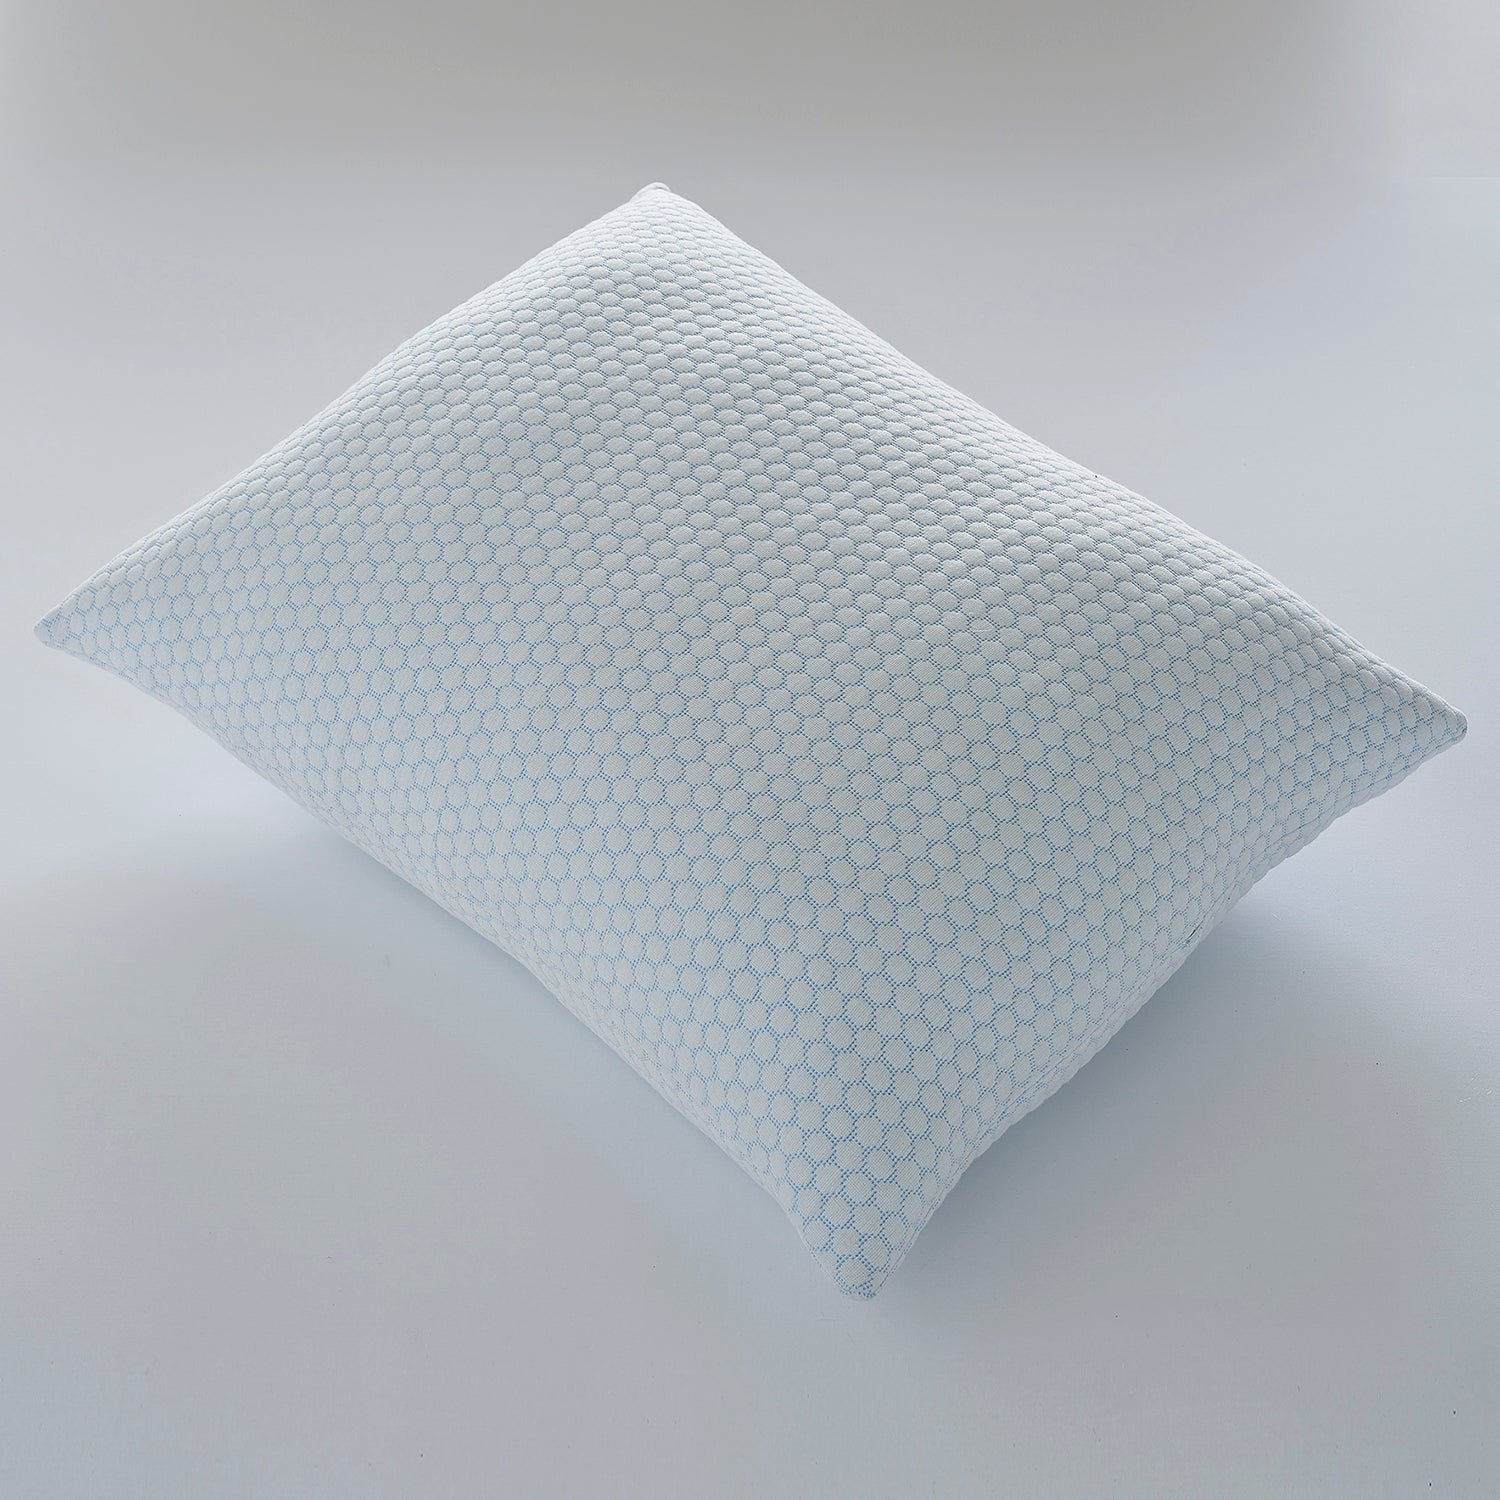 ELLA JAYNE Down Alternative Soft Poly-Cotton King Size Pillow Pack